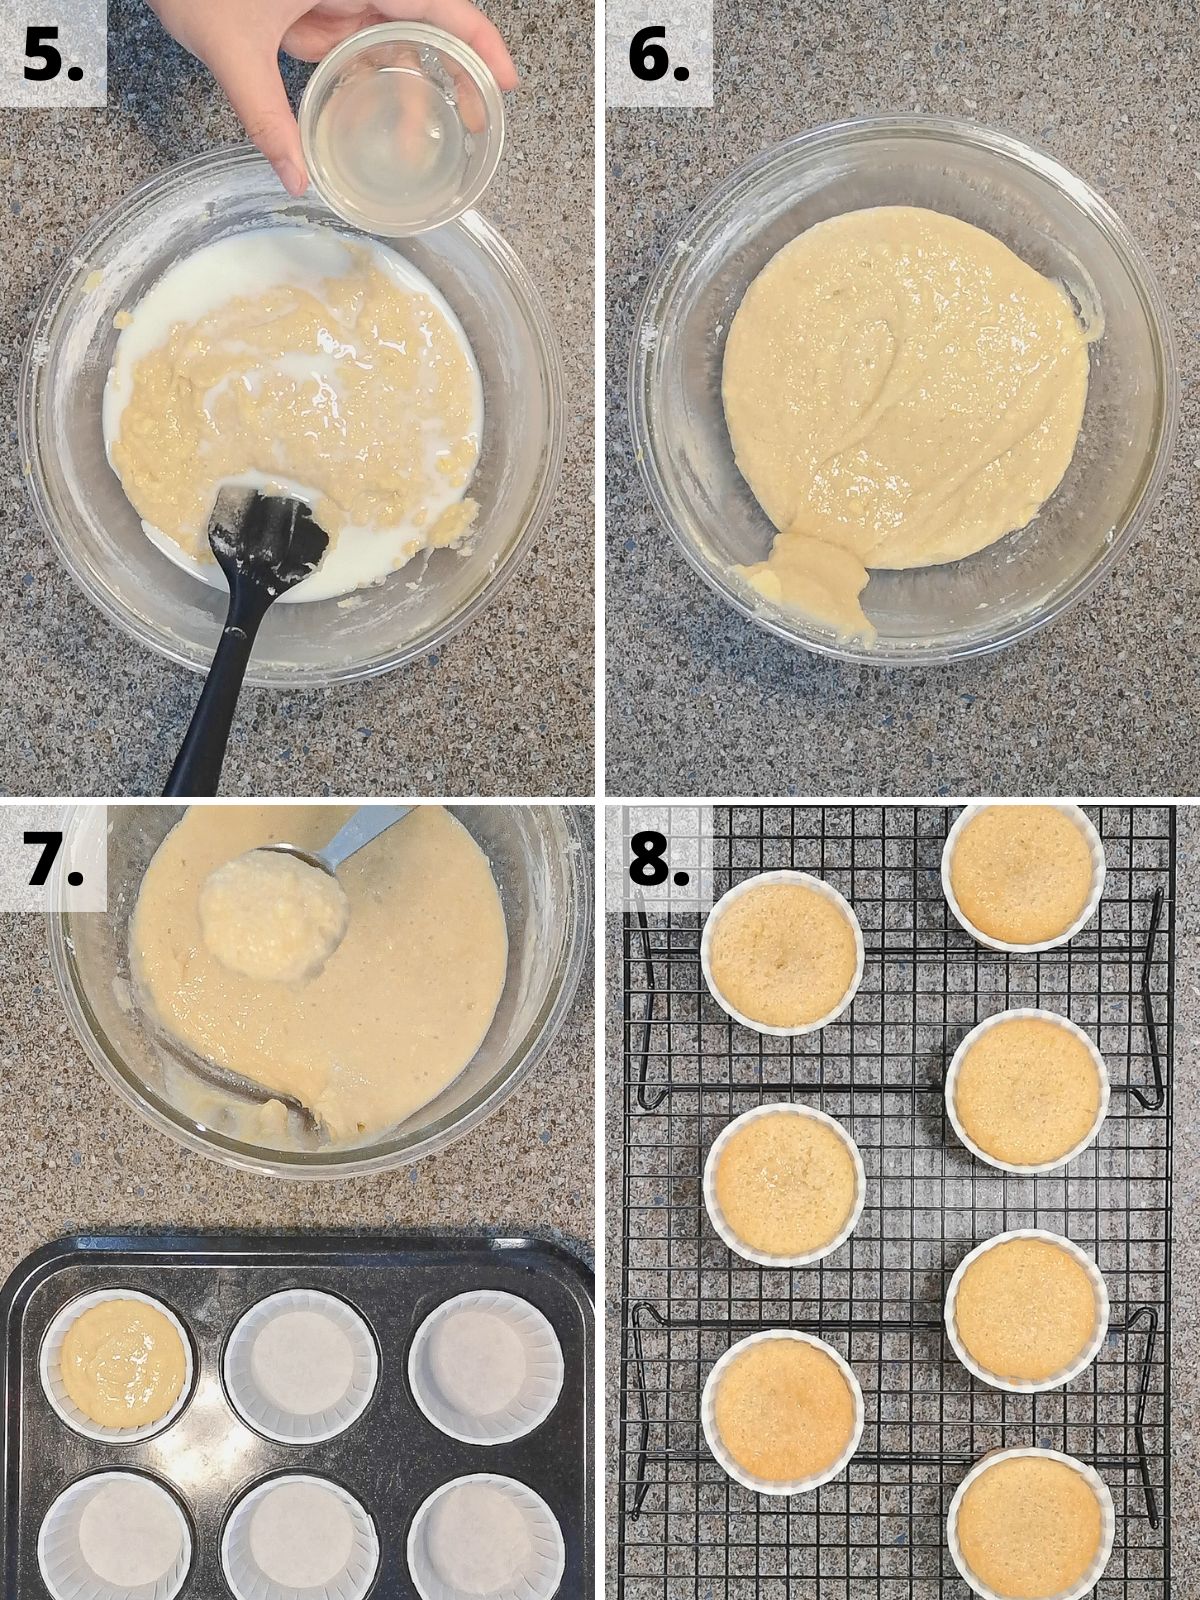 lemon orange cupcakes recipe method steps 5 - 8